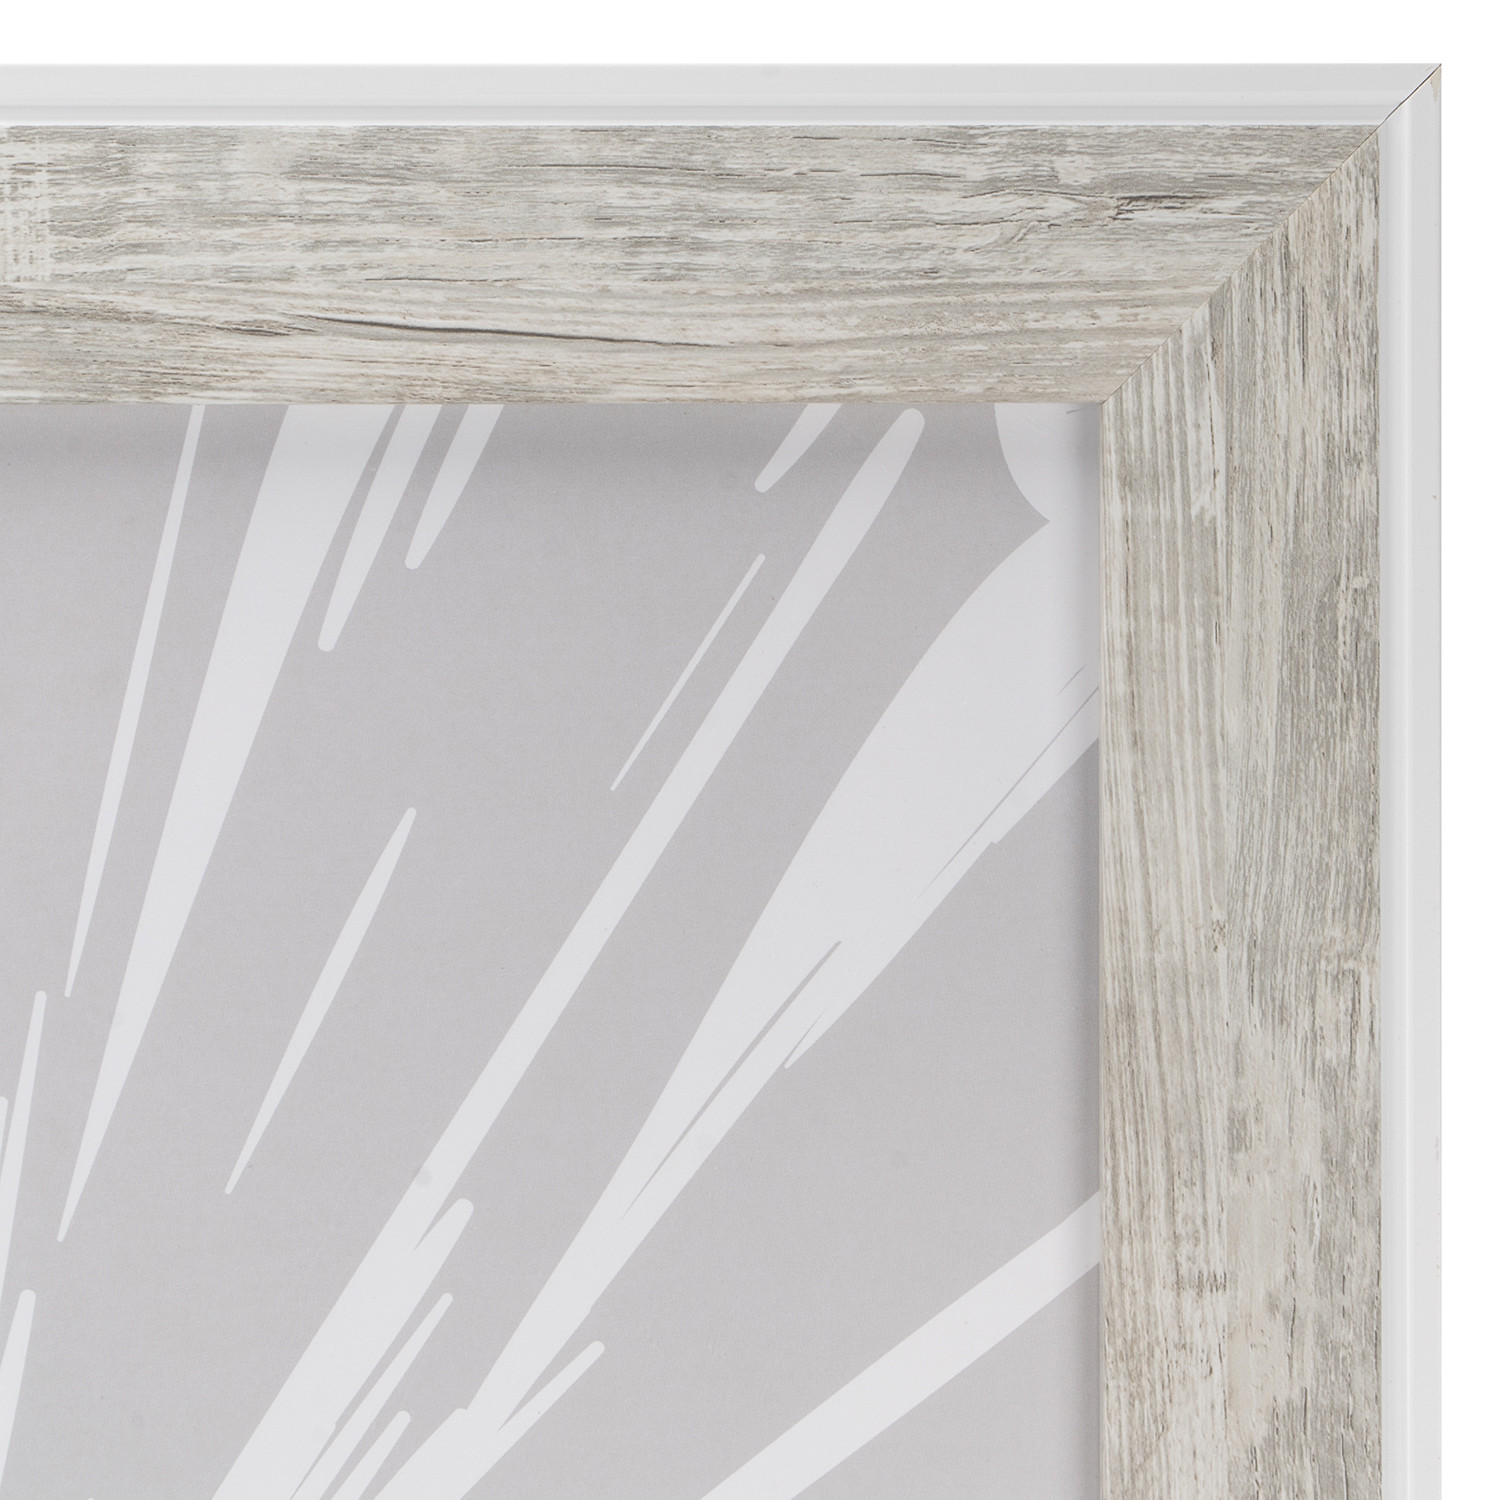 Kroft Grey Wood Effect Frame - 8x6in Image 2